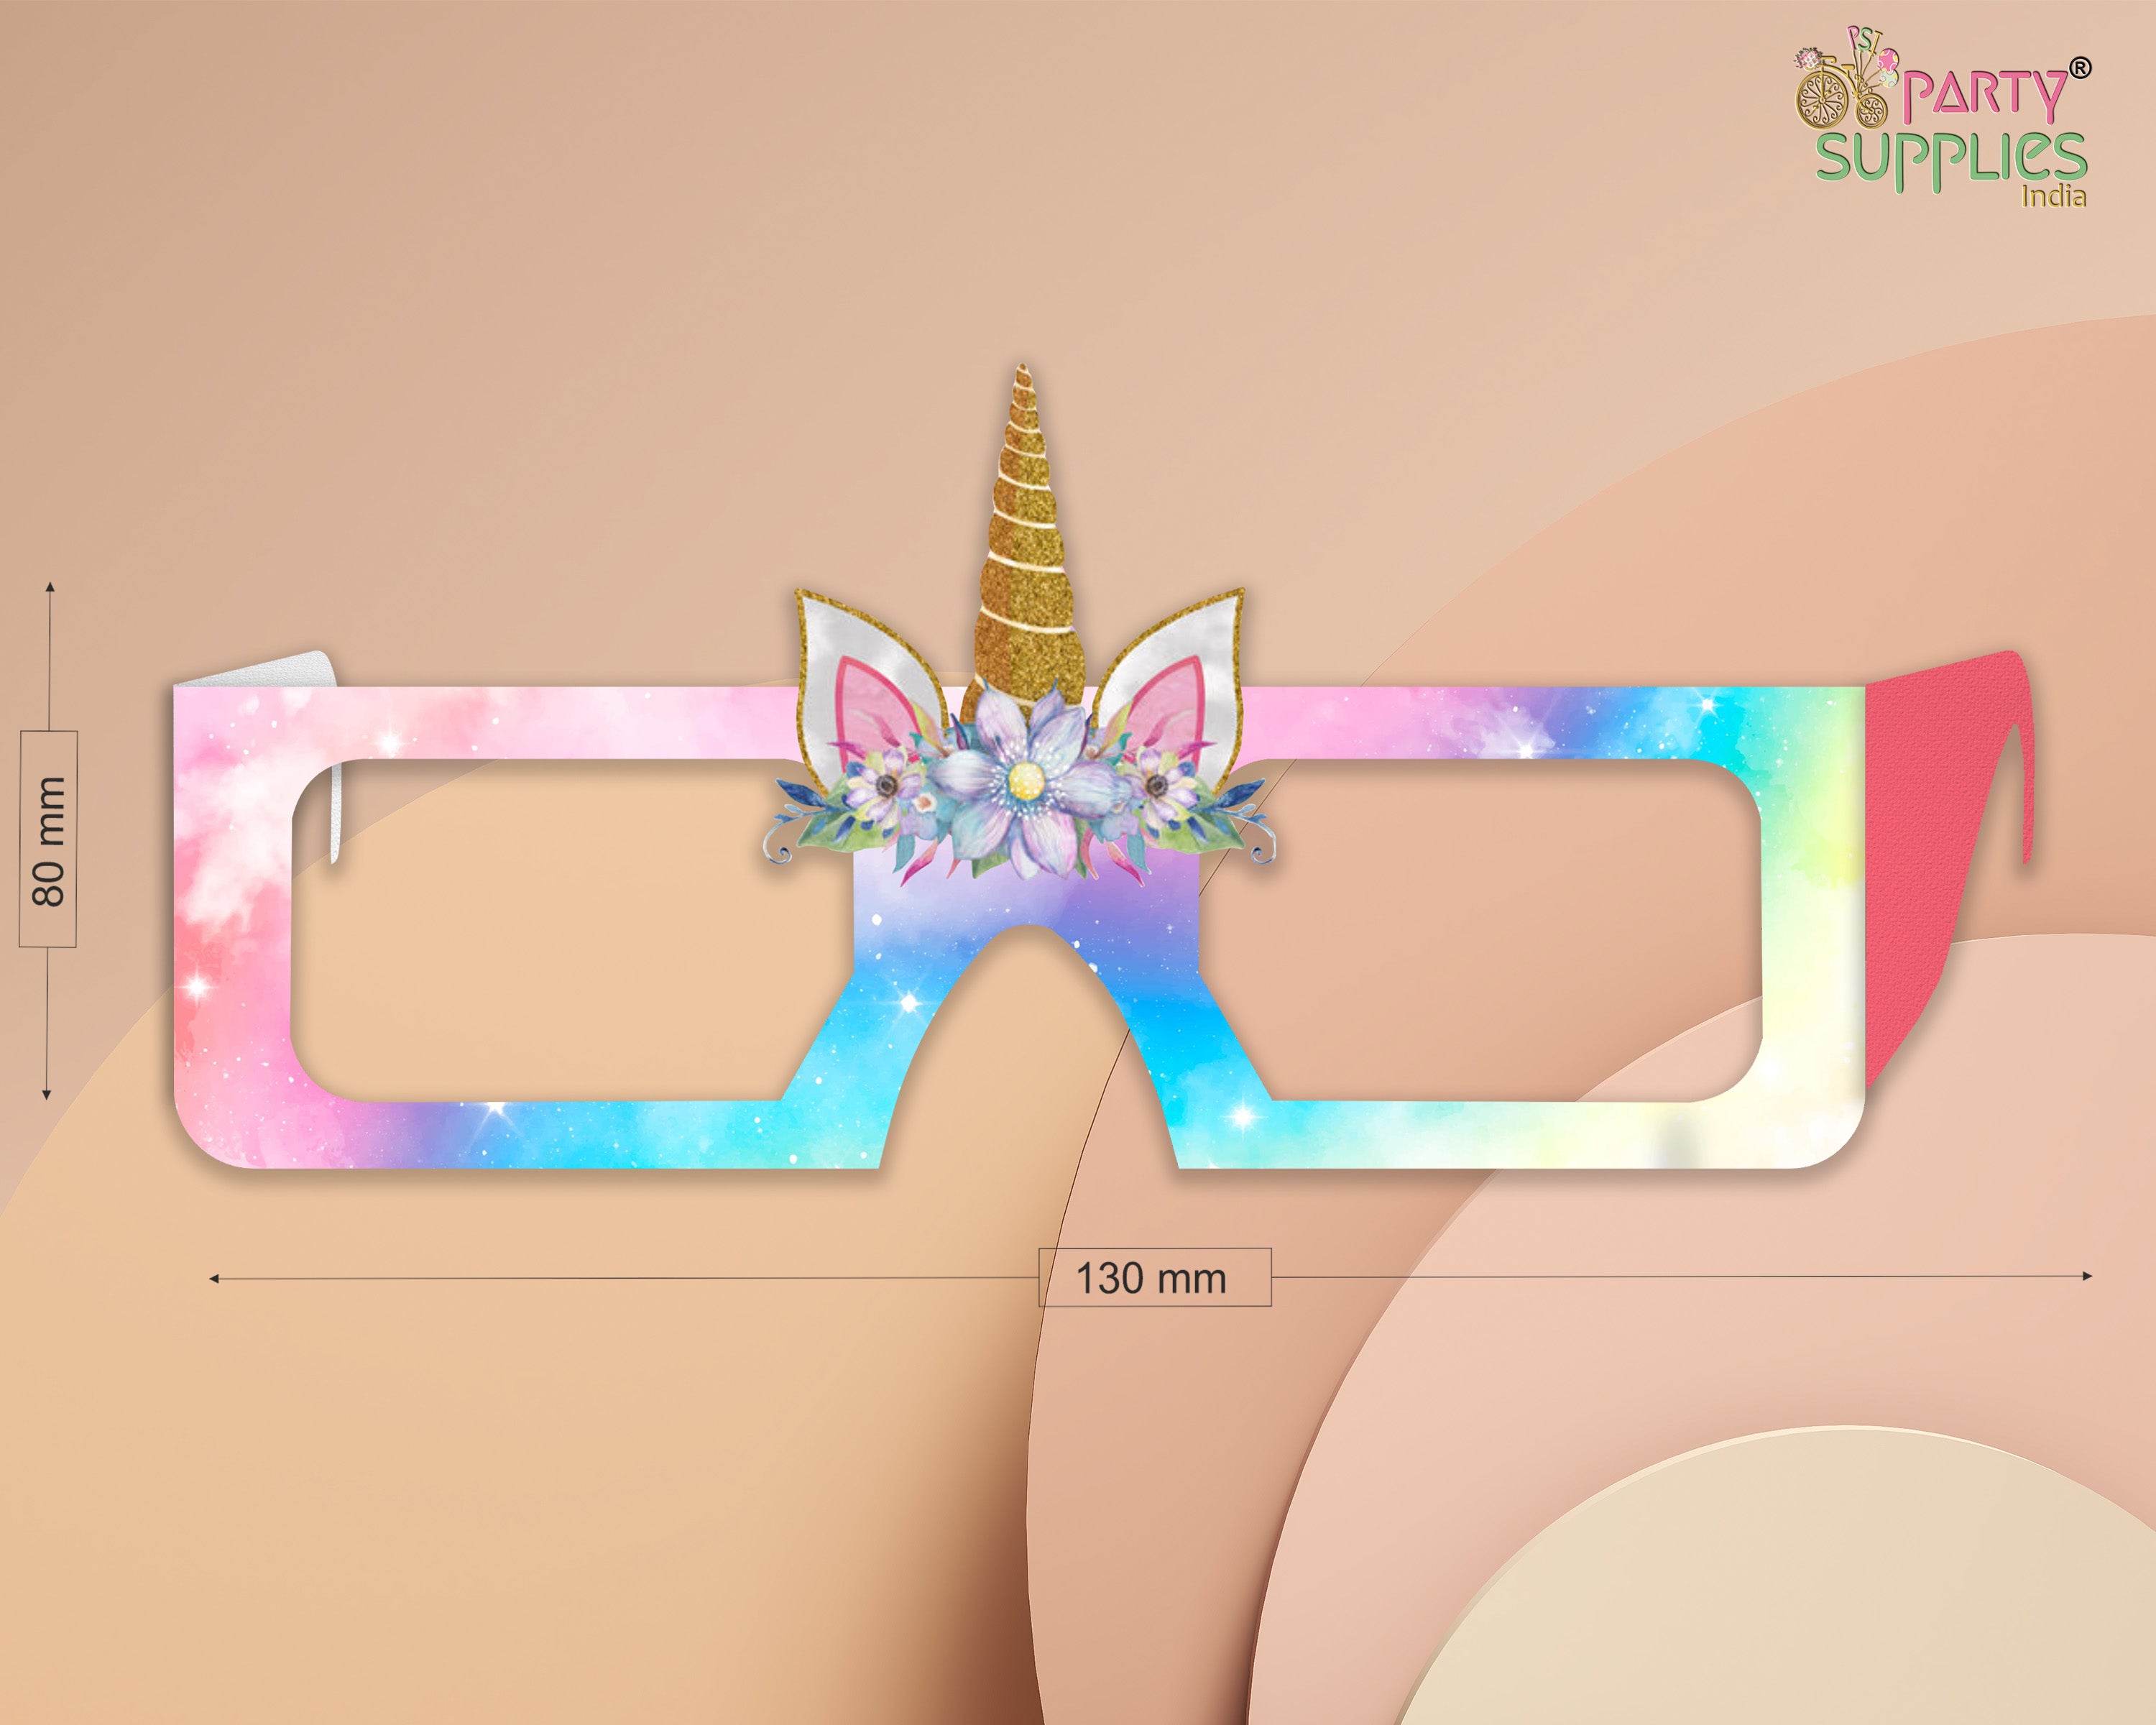 PSI Unicorn theme Birthday Party glasses